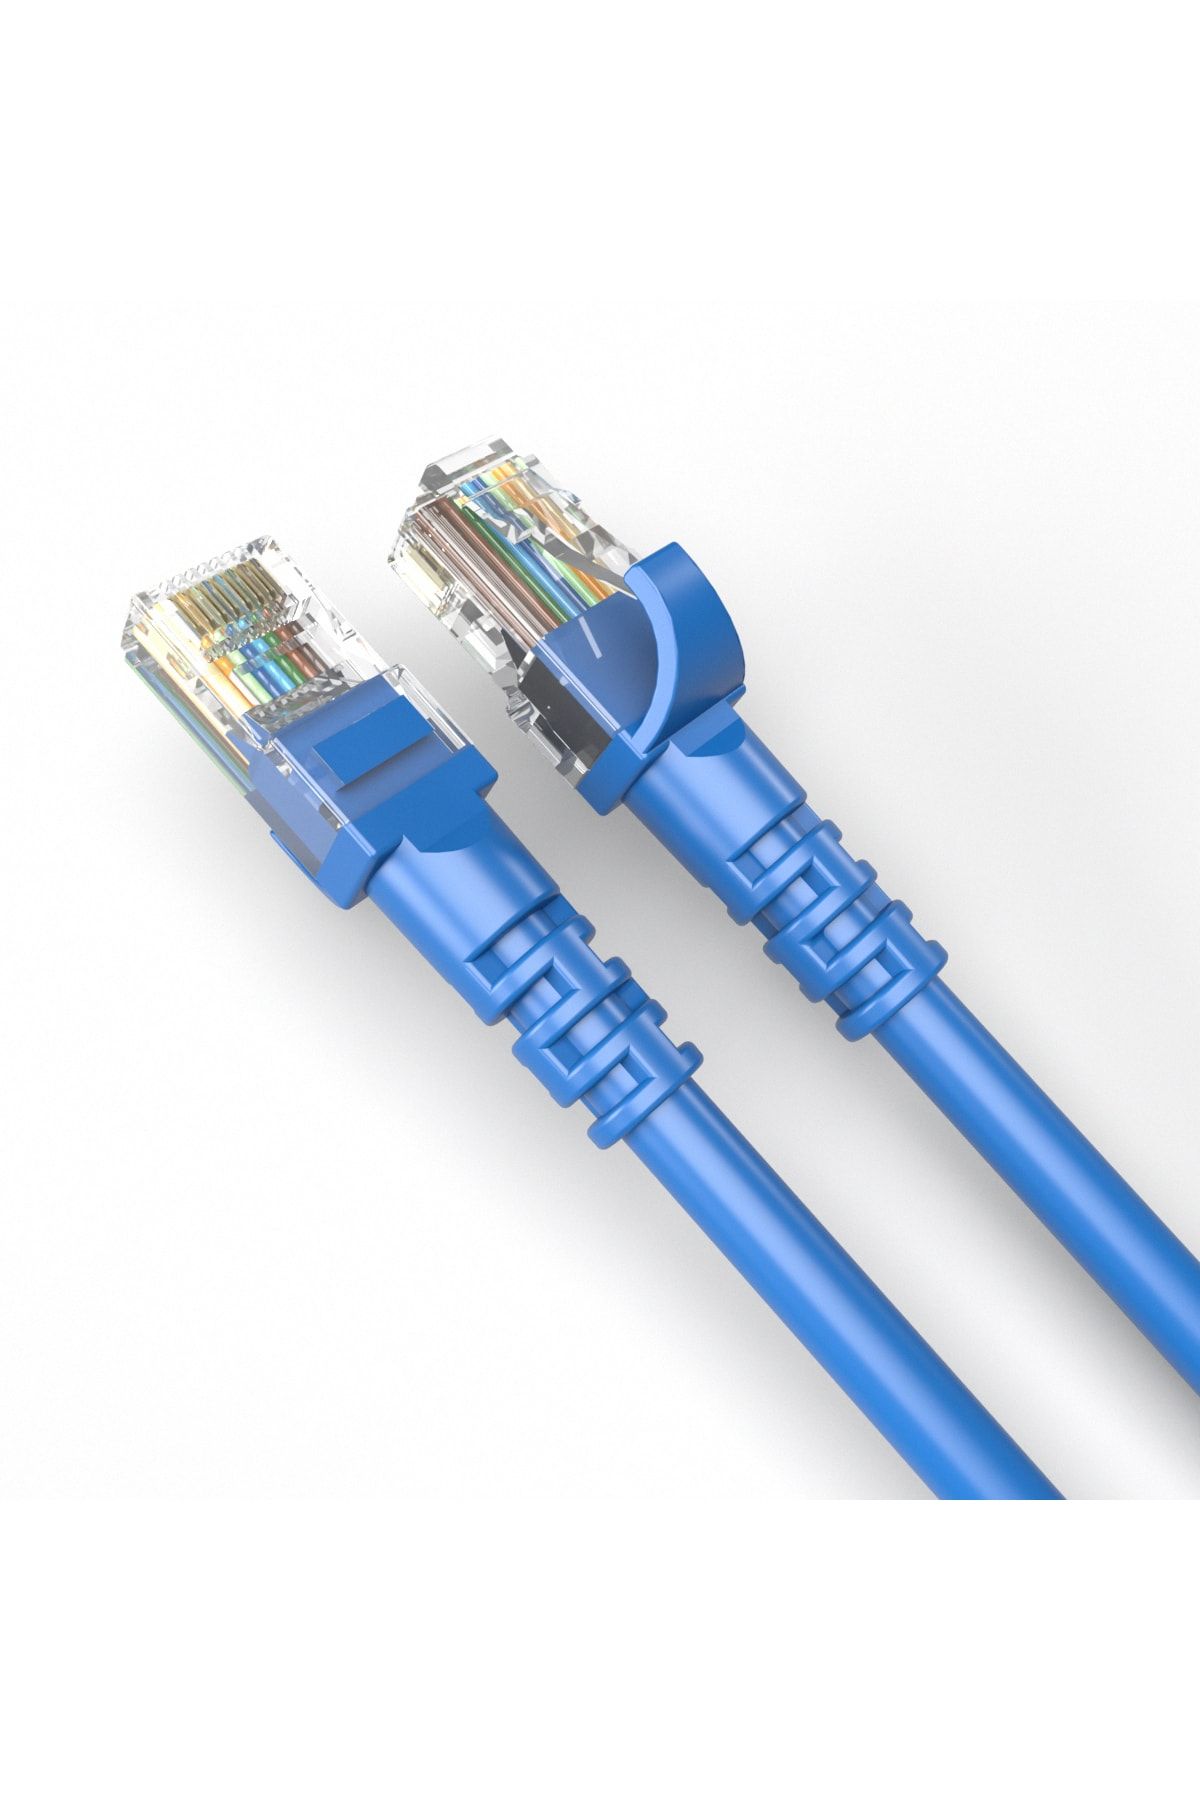 DERKAB 20 Metre Cat6 Network-Ağ-Ethernet Kablosu Mavi